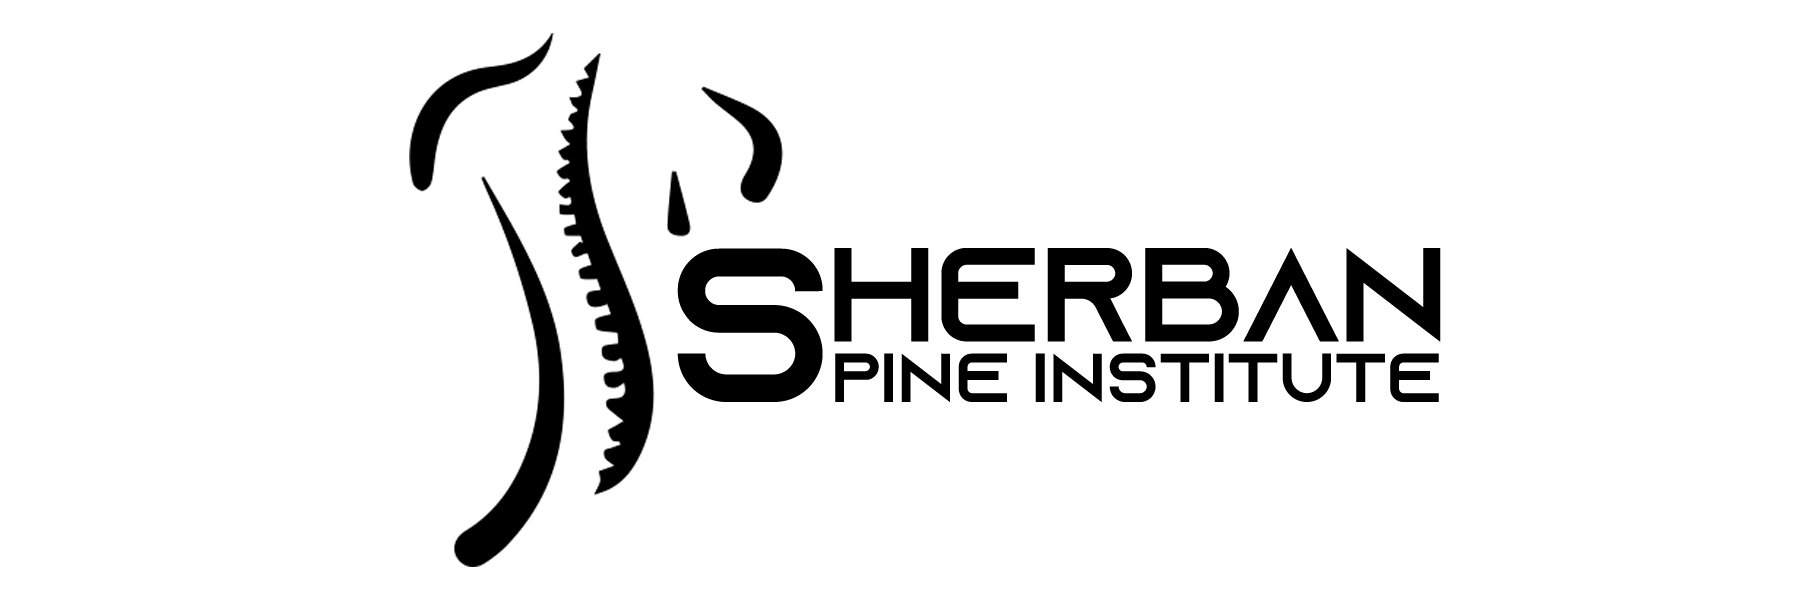 Sherban Spine Institute | 844.733.3774